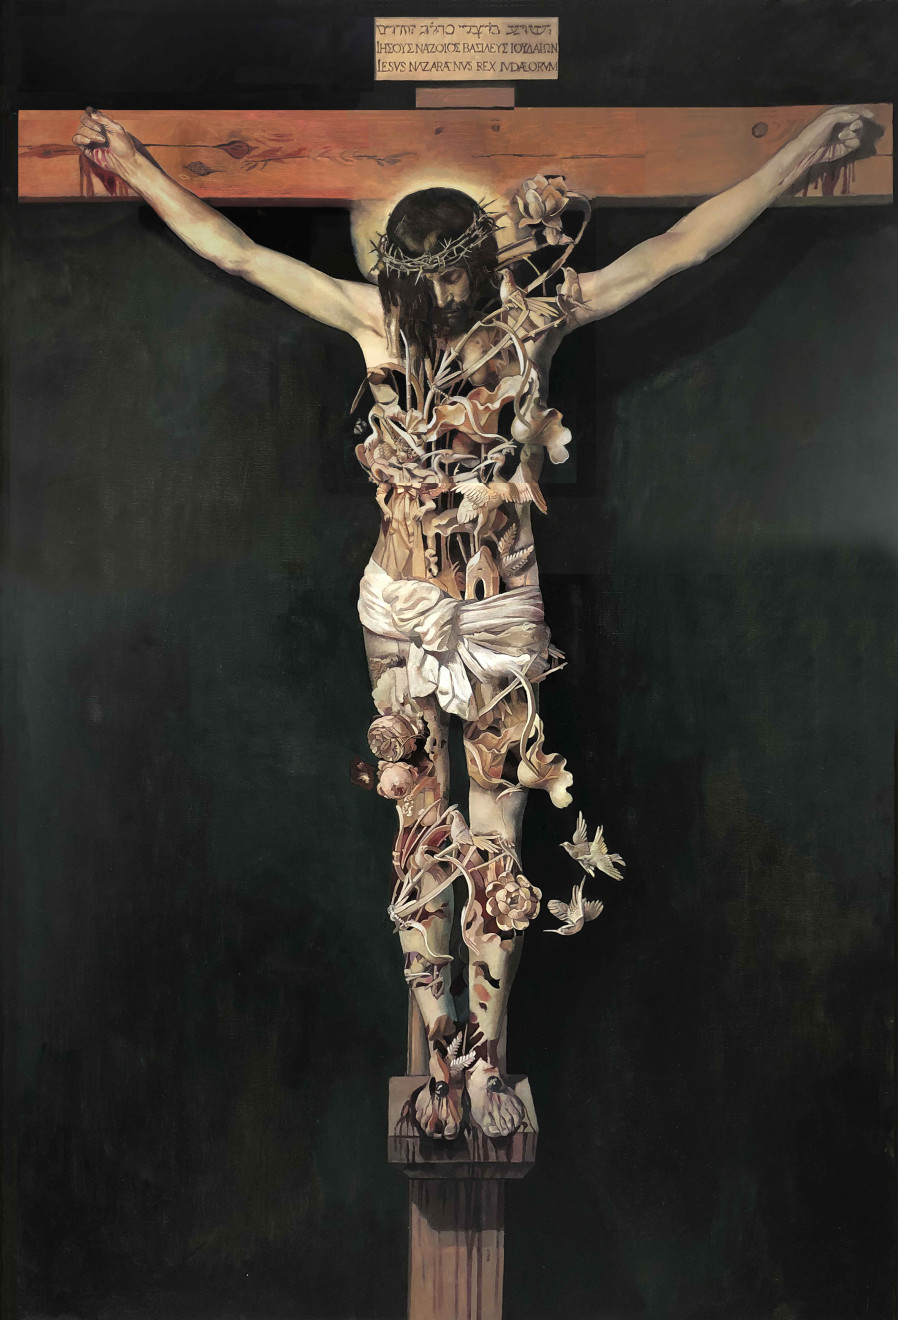 Wolfe von Lenkiewicz, Christ on the Cross, 2018